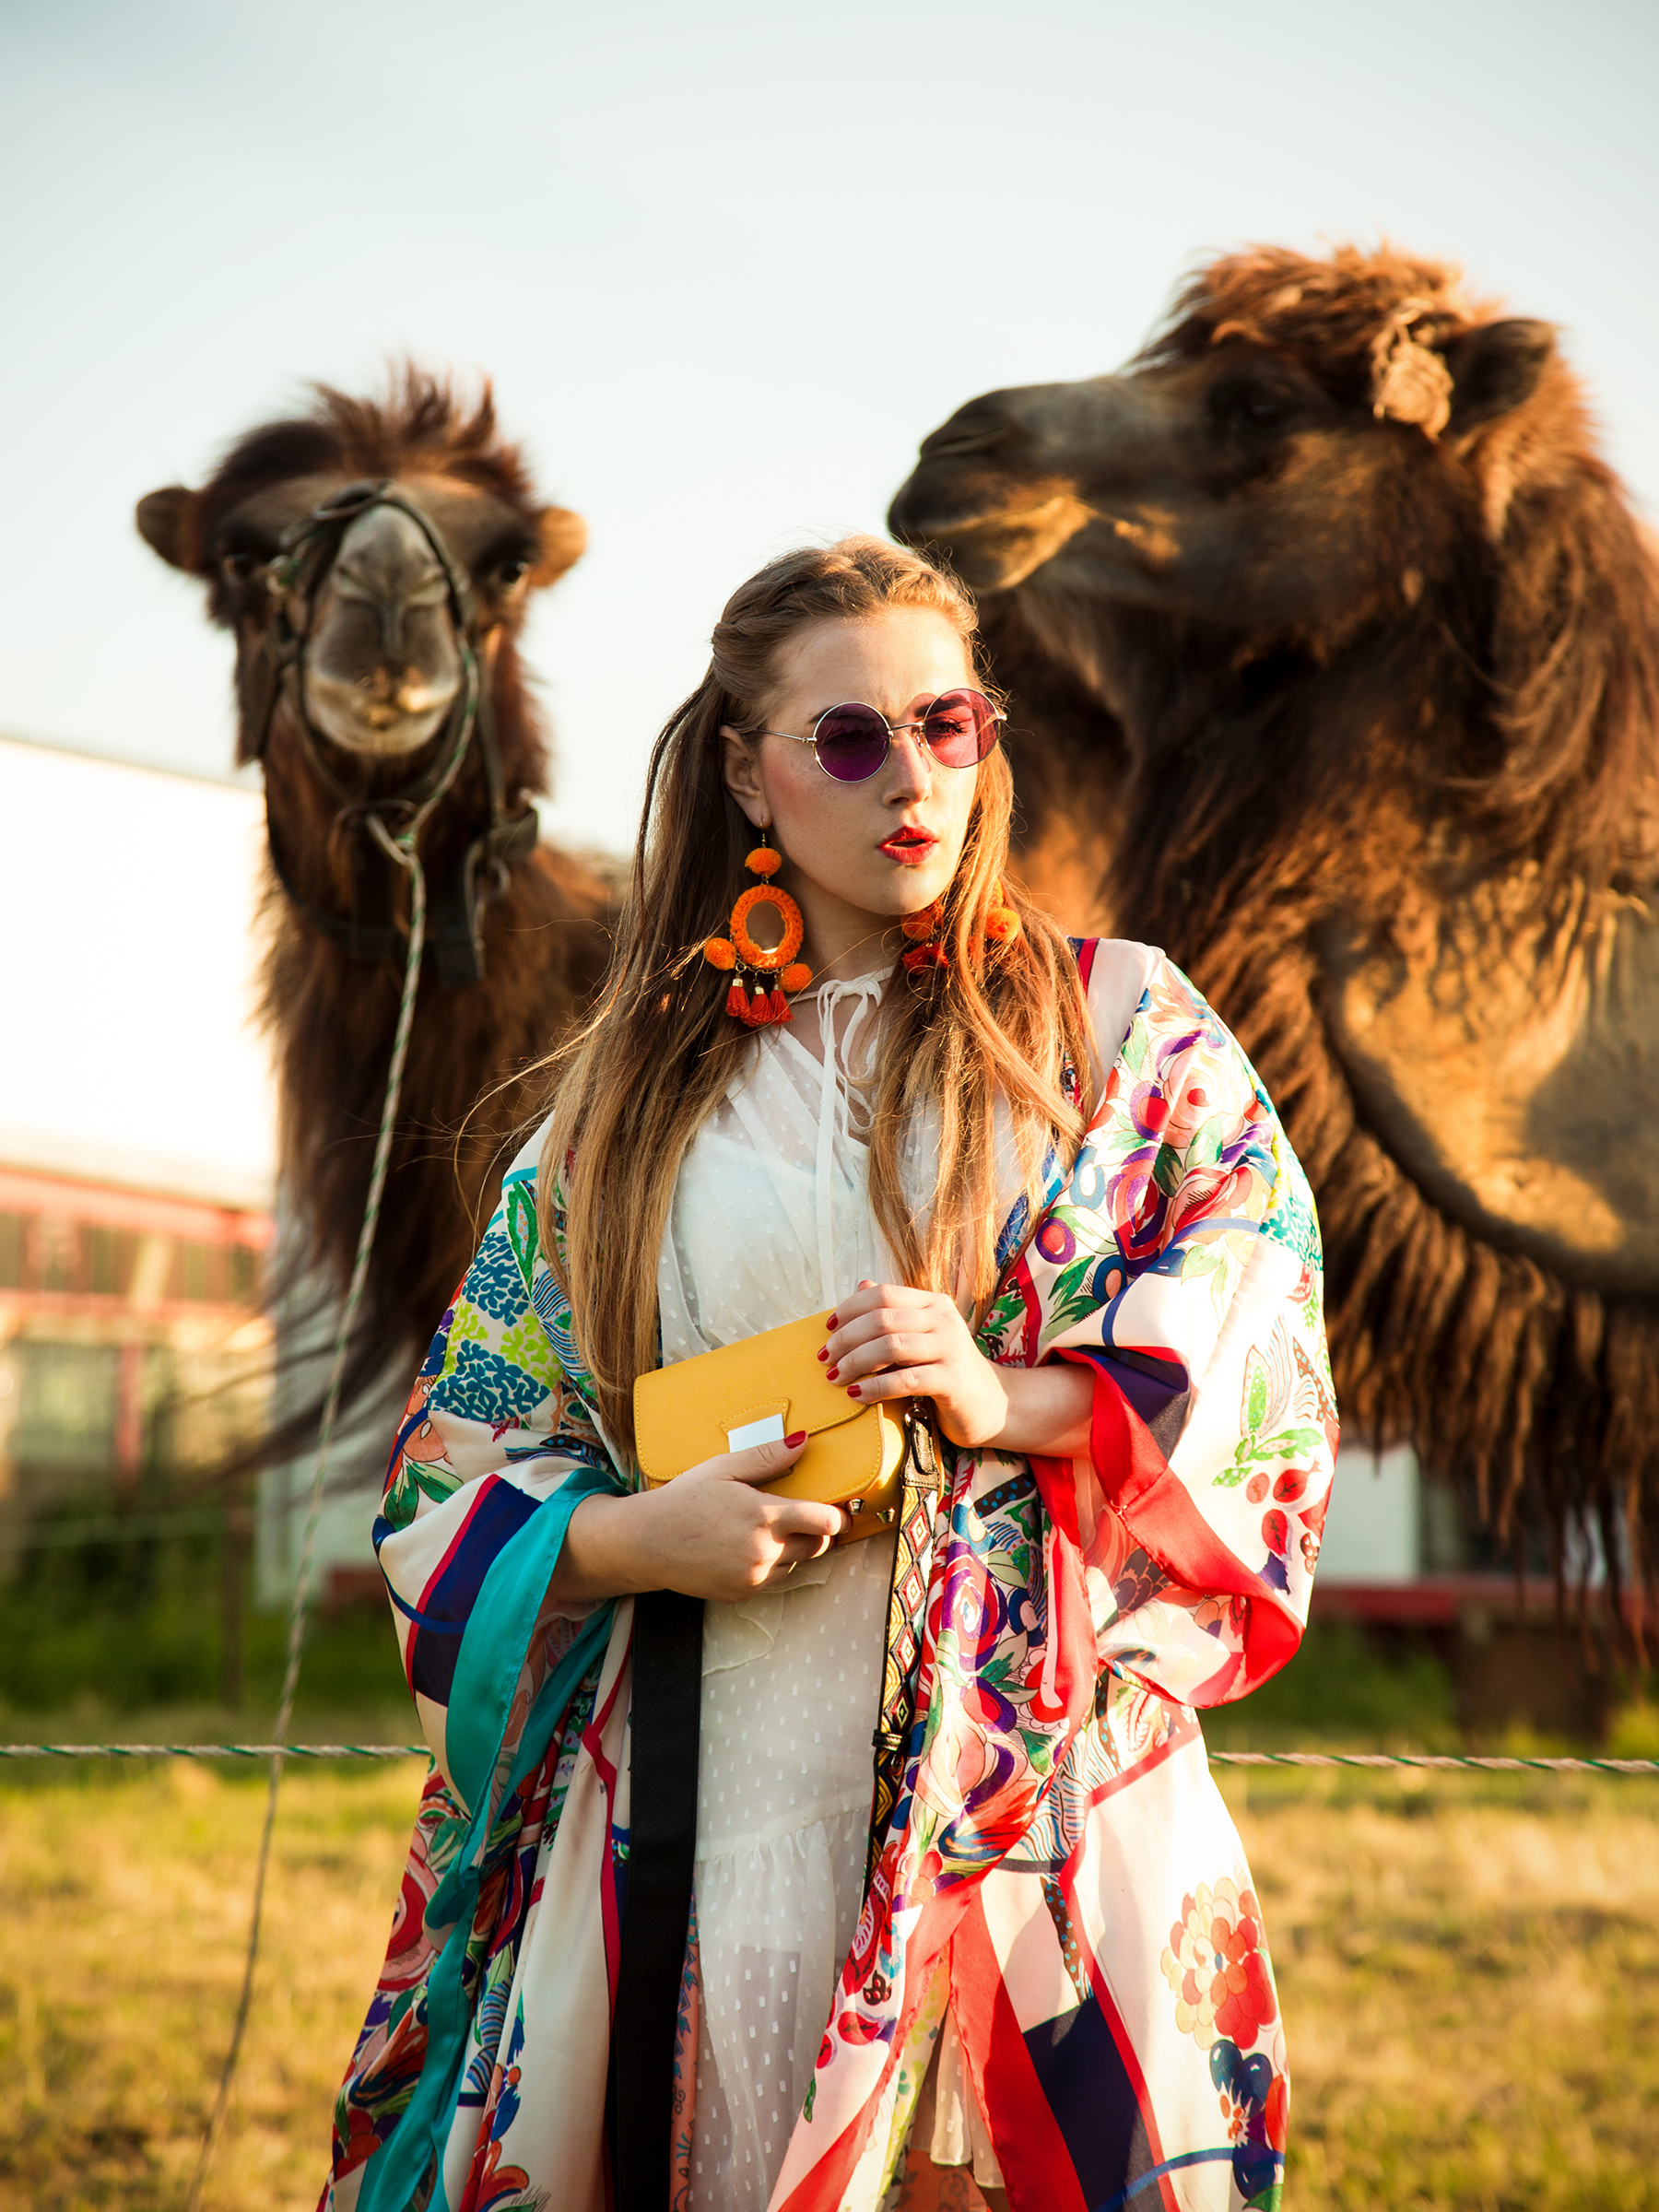 Amely Rose festival look vor kamelen, tierfotografie coachella summerlook im bunten zara kimono